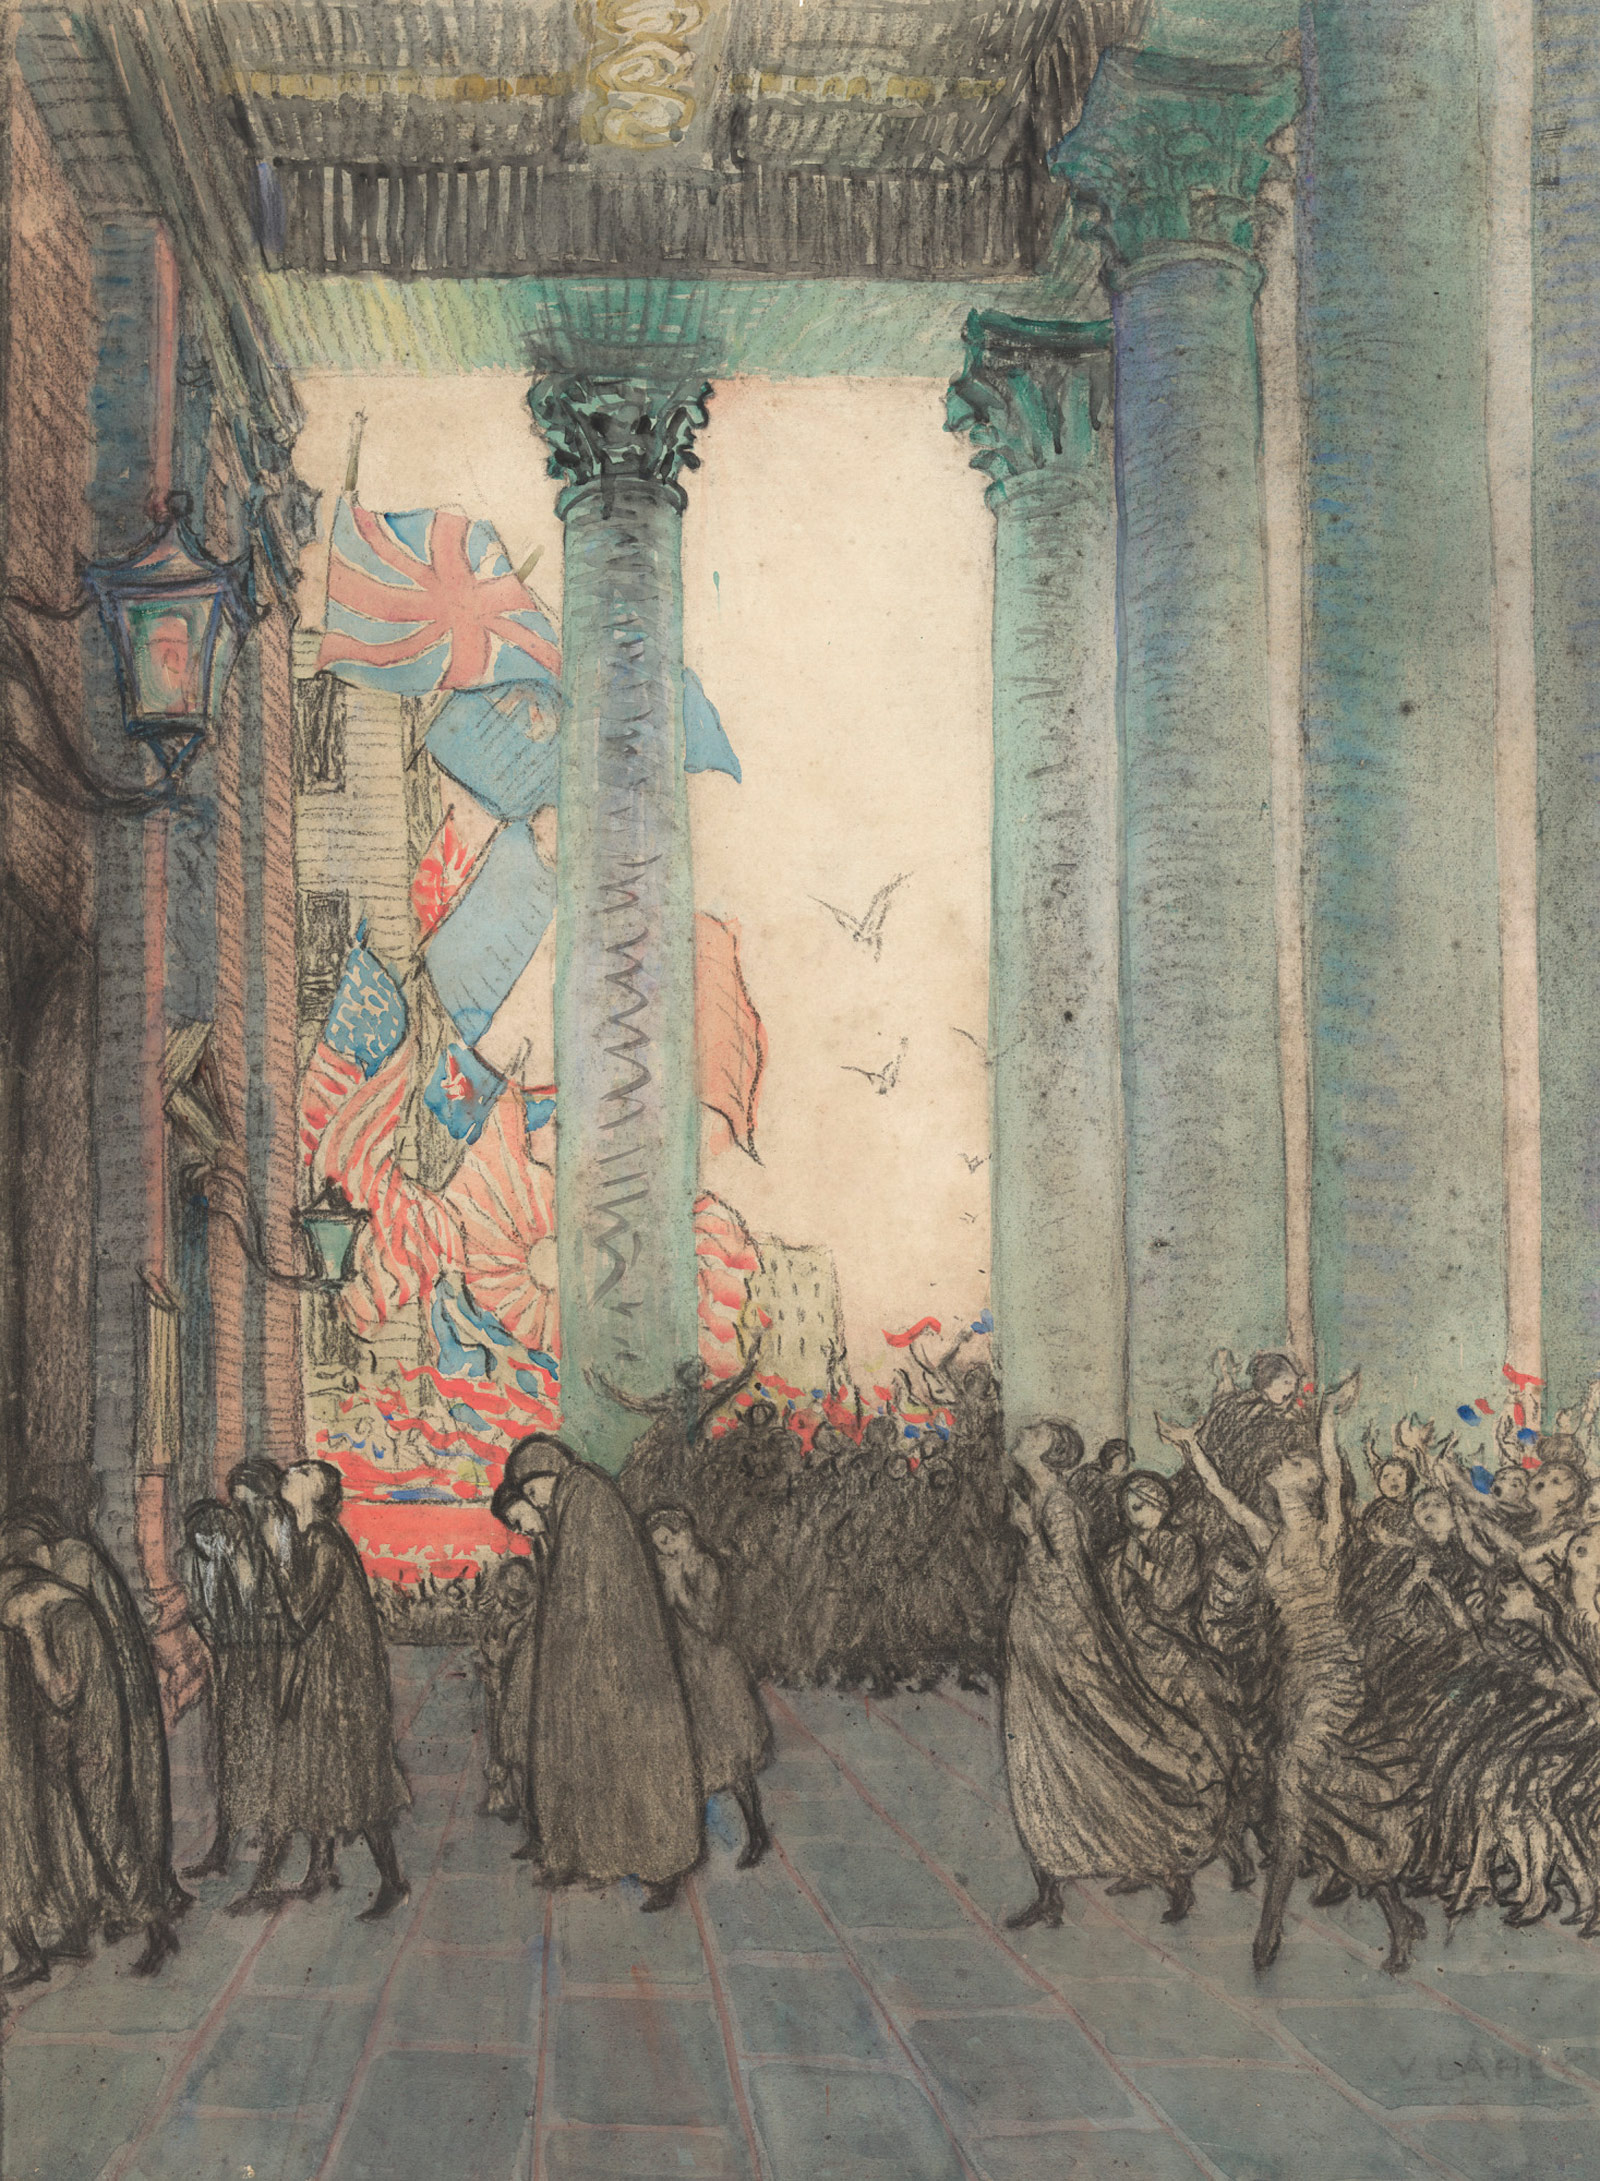 Rejoicing and remembrance, Armistice Day, London, 1918, 1924, Vida Lahey, 74.5 x 56 cm